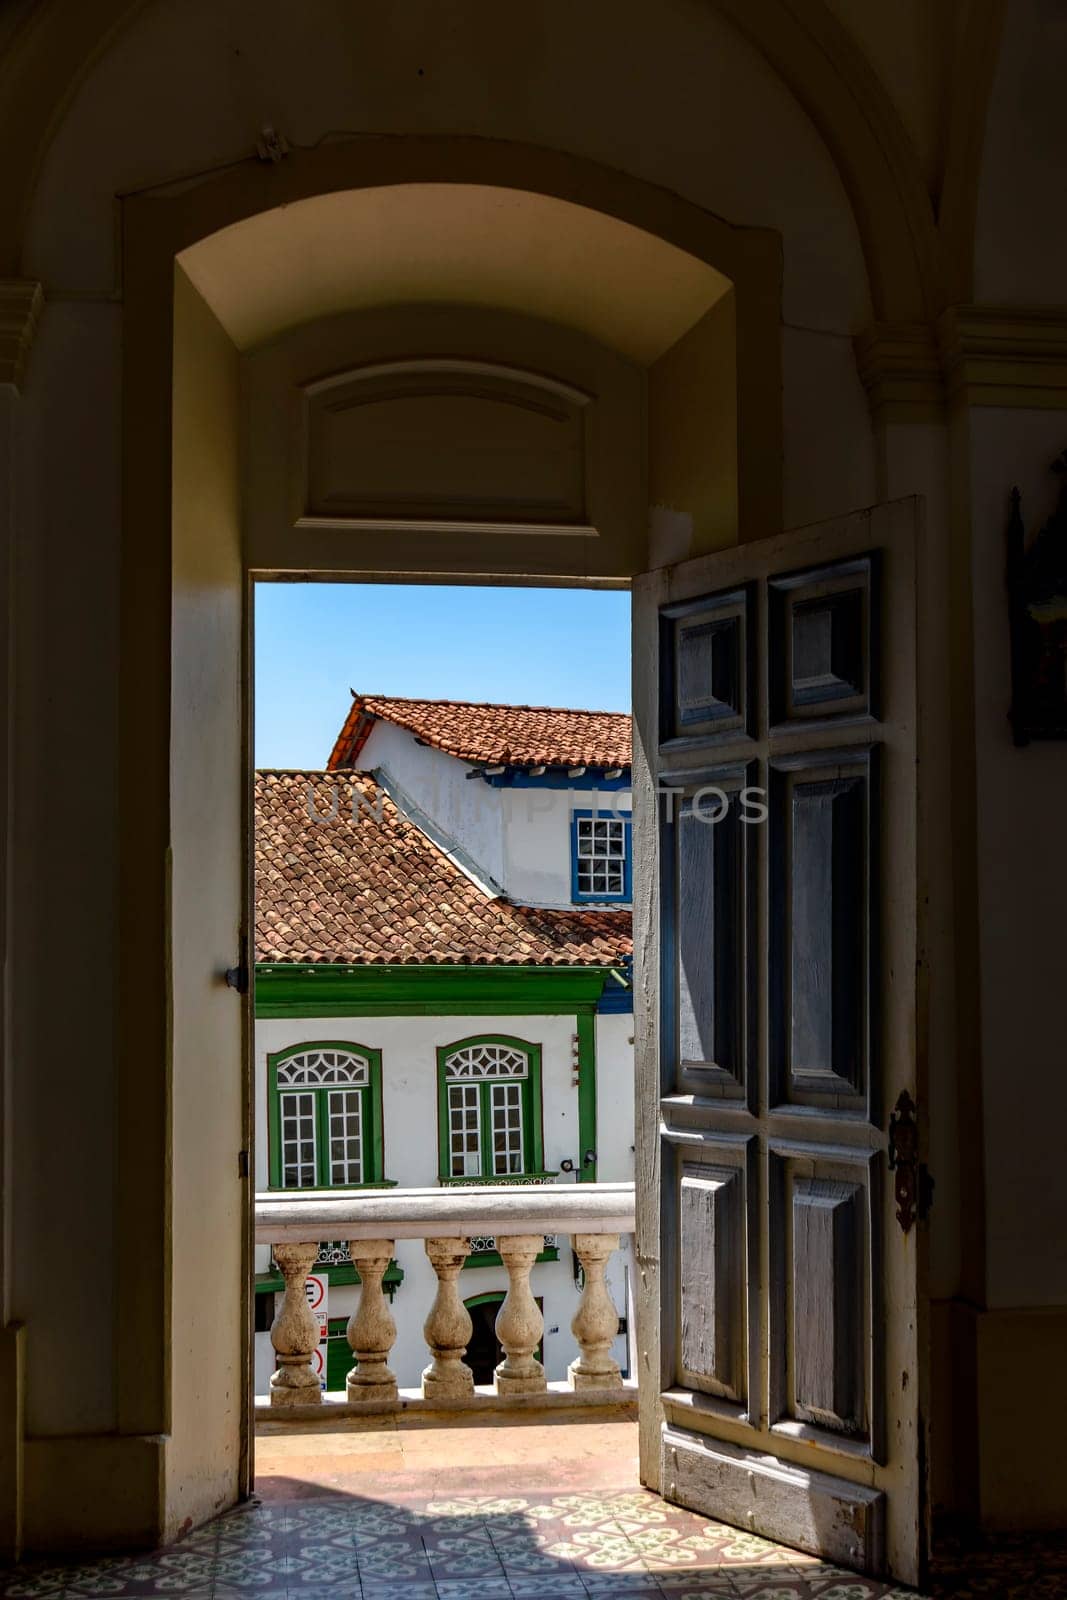 Antique colonial houses seen through the door of historic church in the city of Diamantina in Minas Gerais